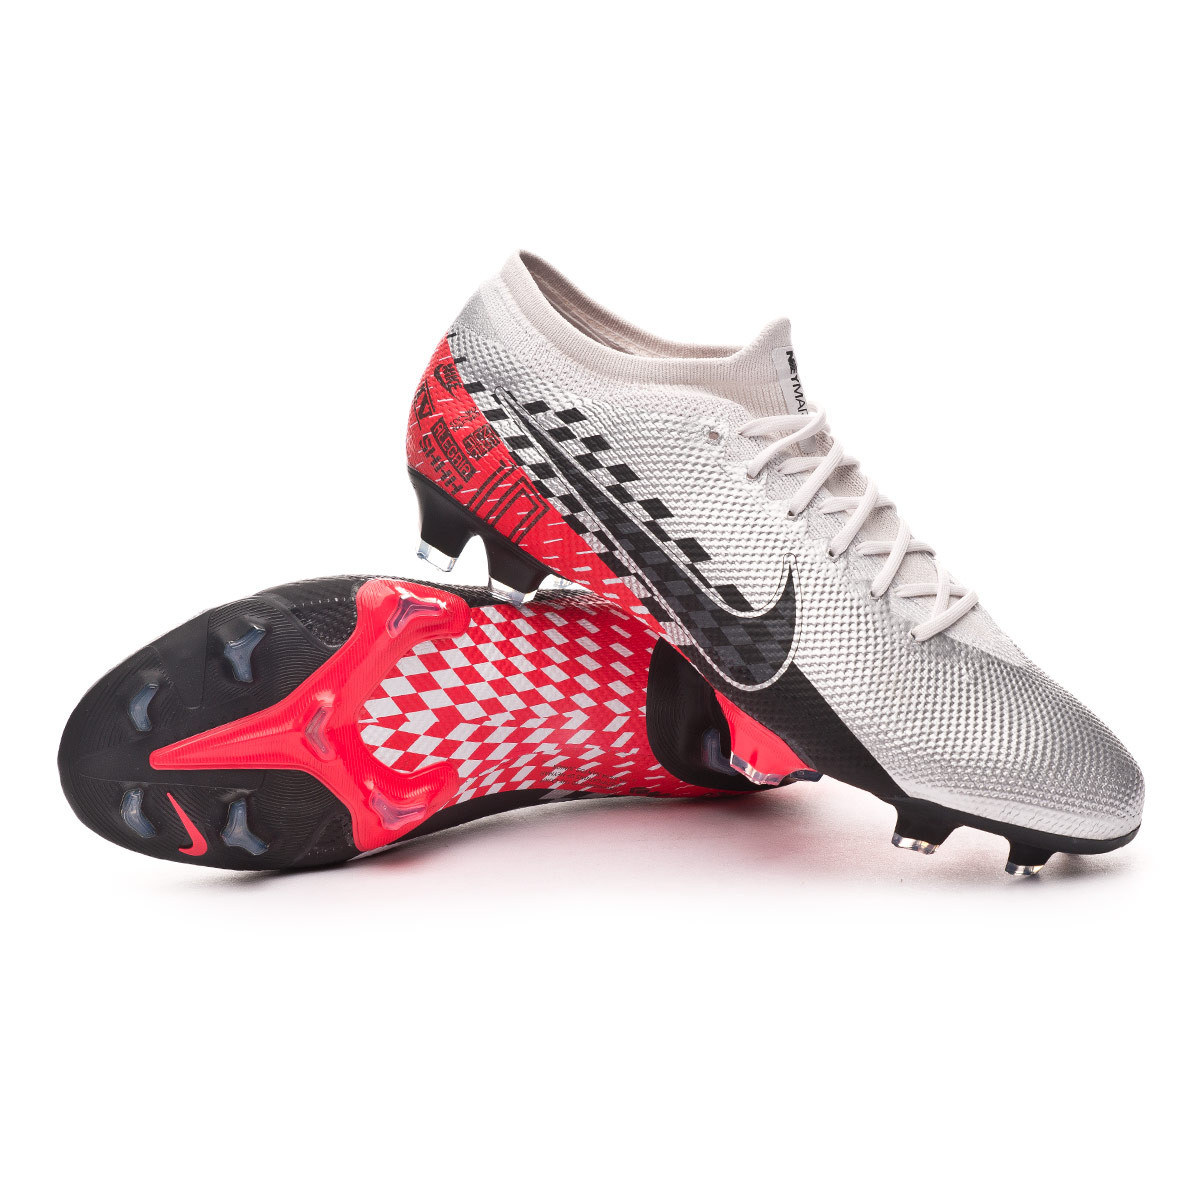 Zapatos de fútbol Nike Mercurial Vapor XIII Pro FG Neymar Jr  Chrome-Black-Red orbit-Platinum tint - Tienda de fútbol Fútbol Emotion